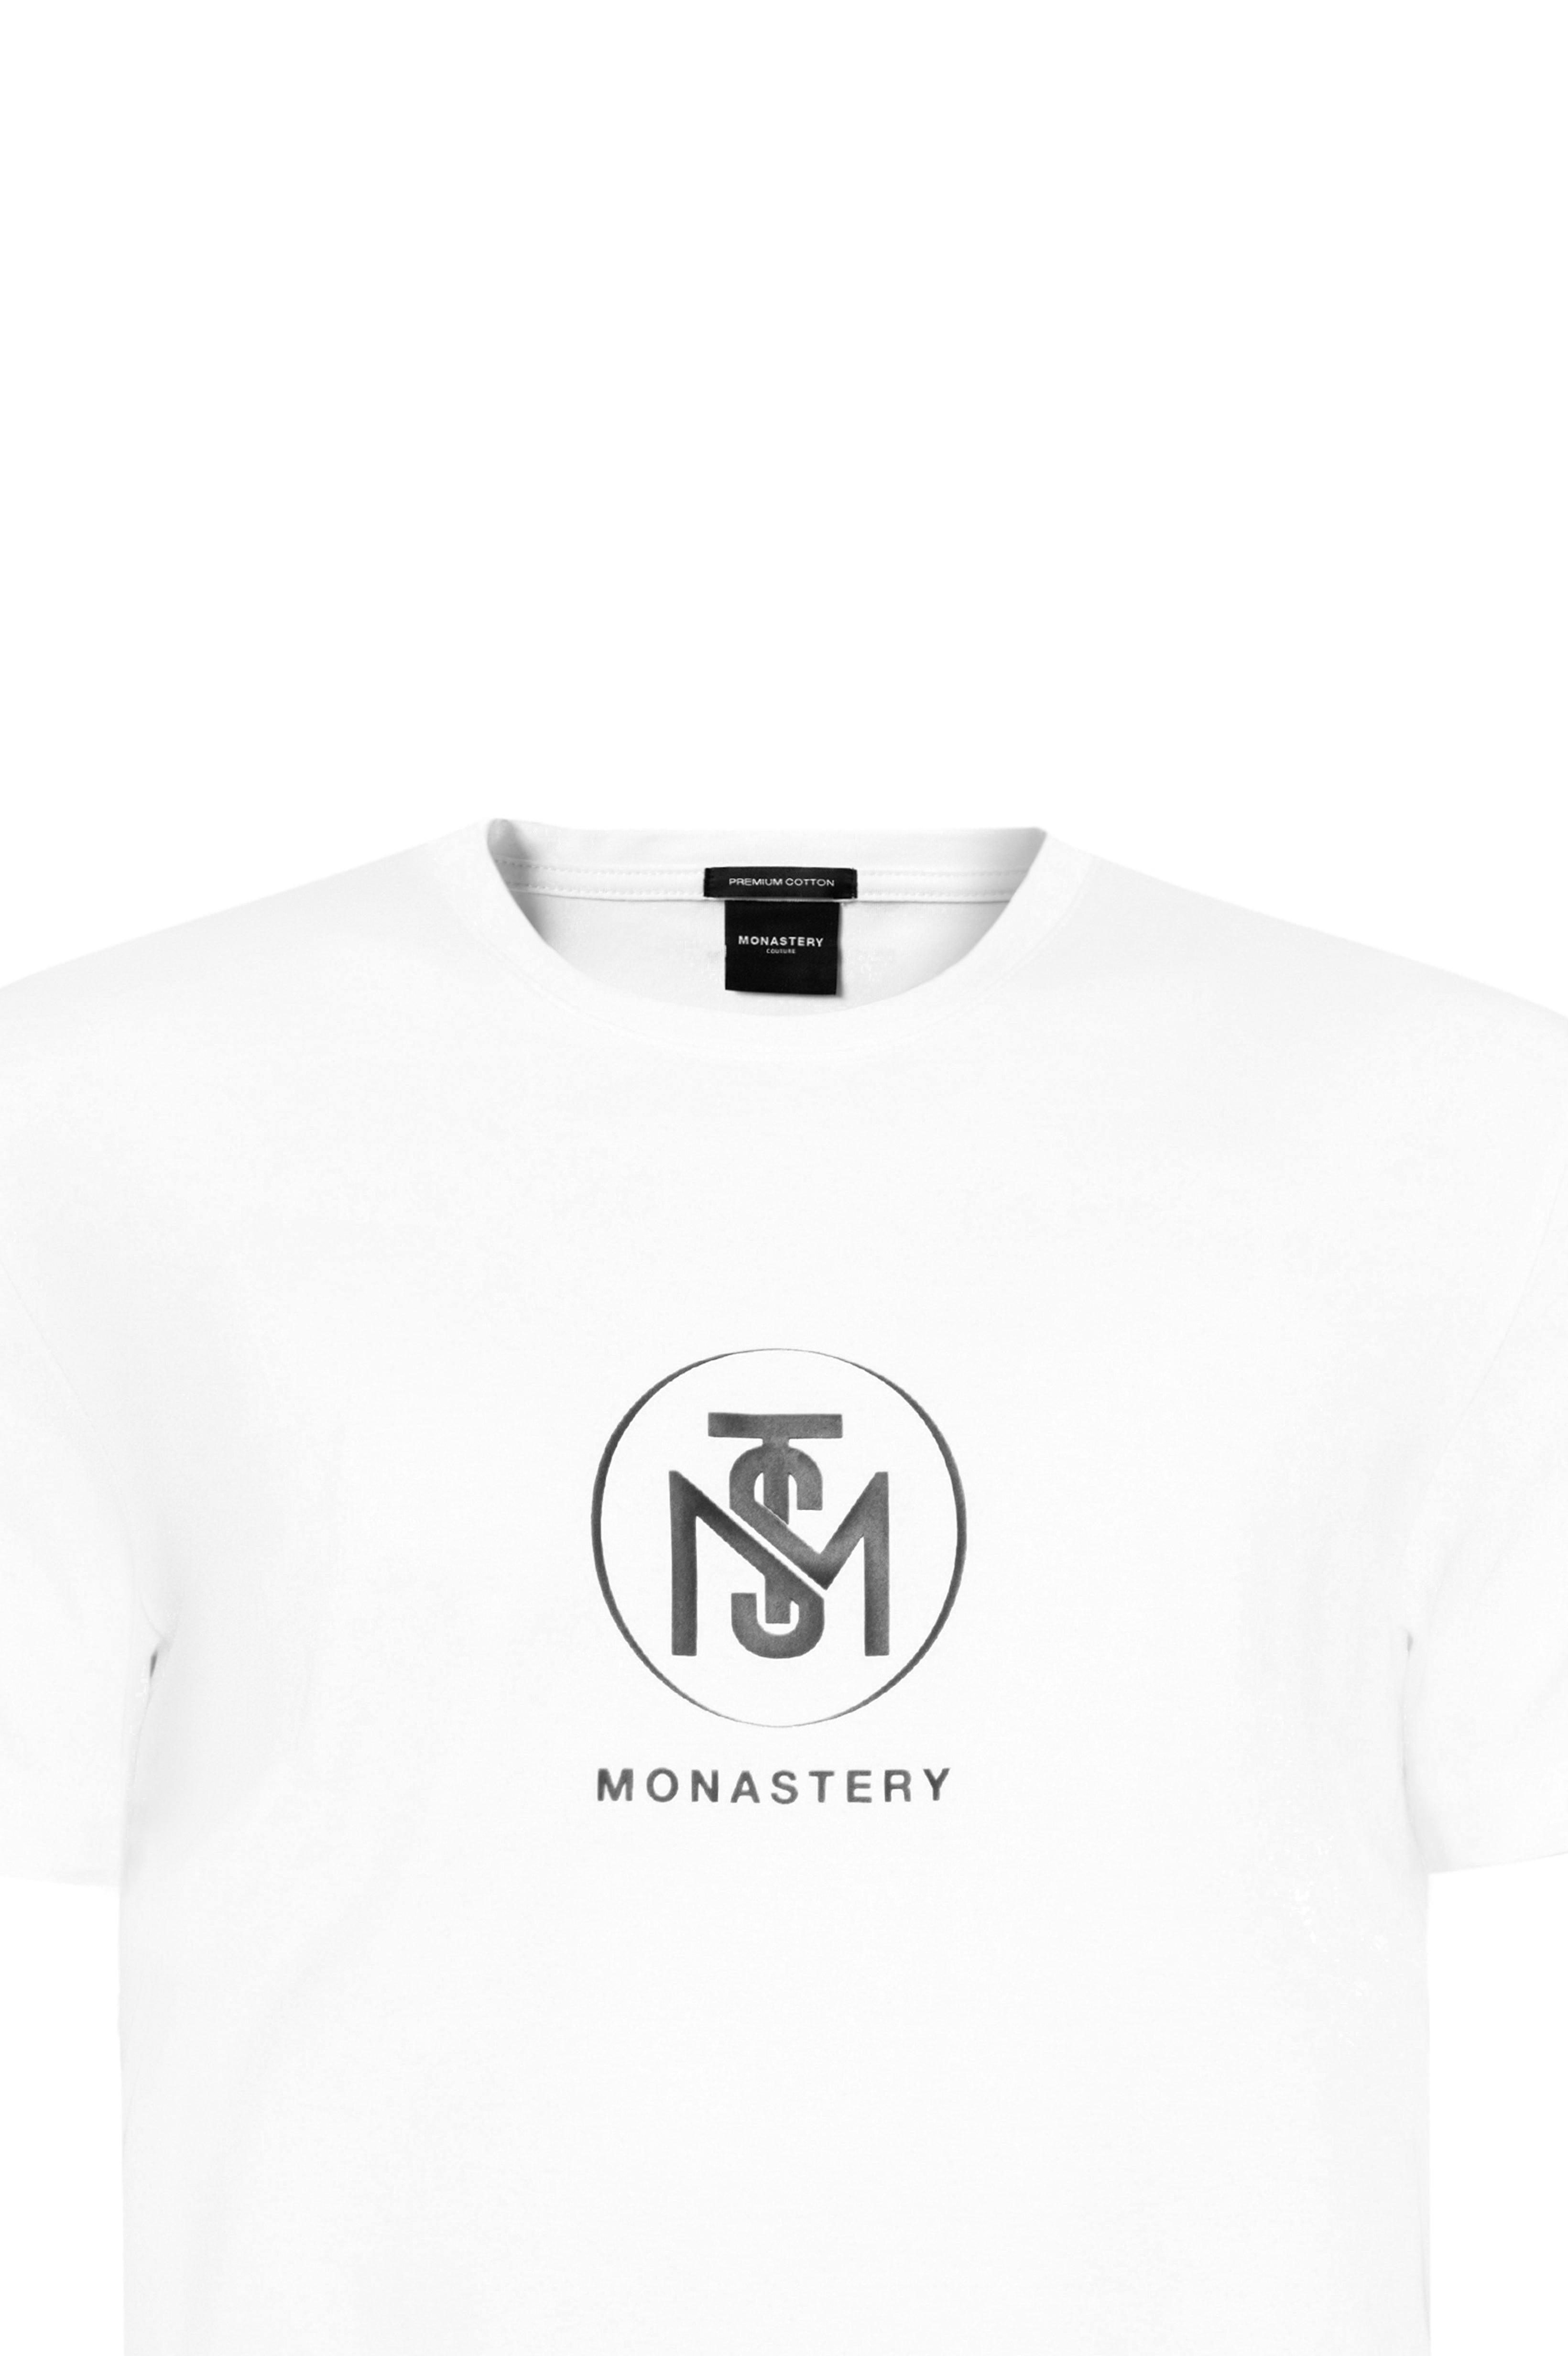 MADISON T-SHIRT WHITE | Monastery Couture